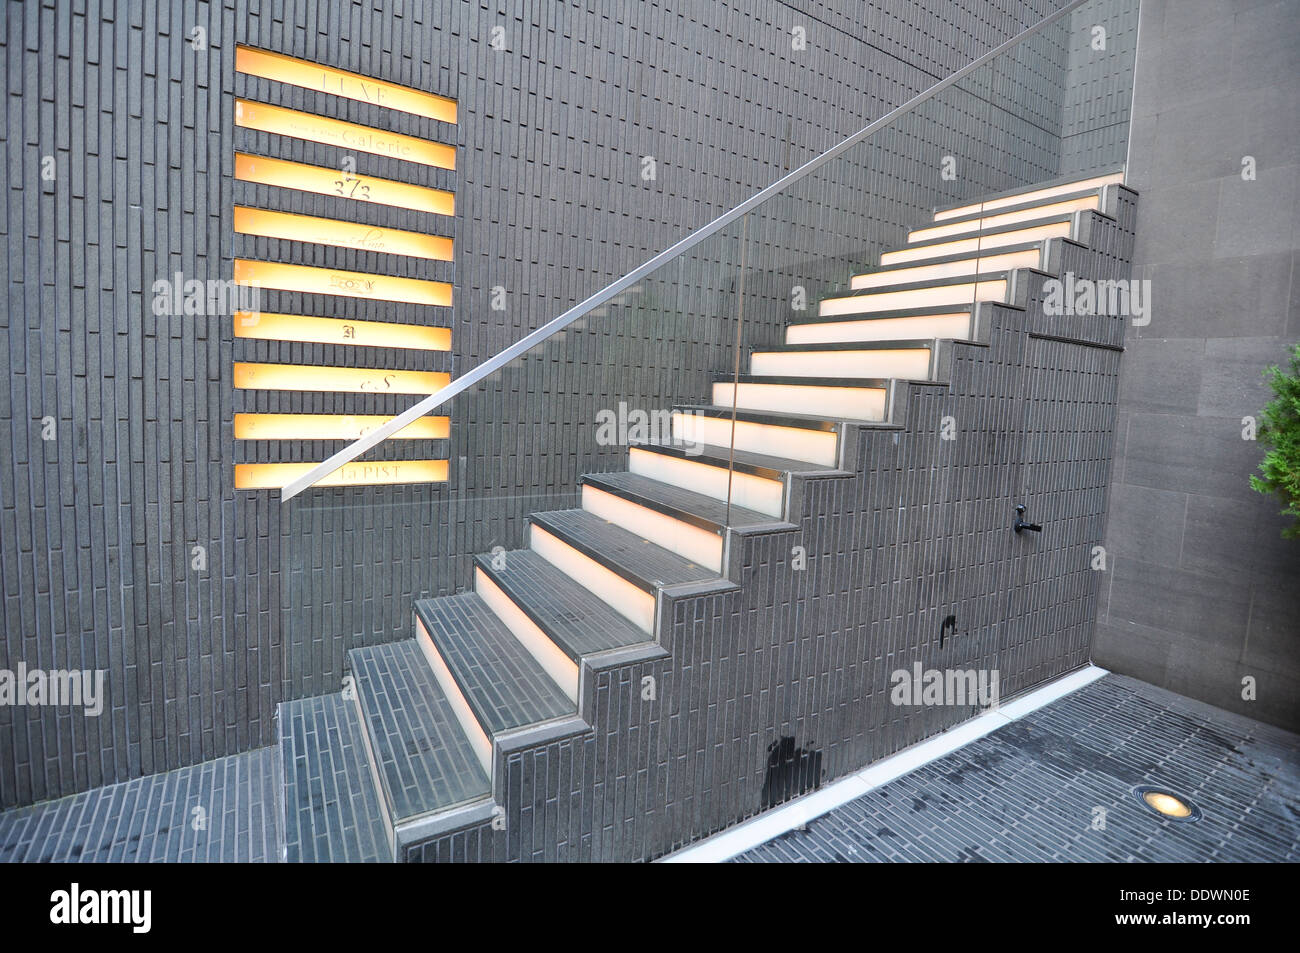 Un conjunto de escaleras exteriores con luces. Foto de stock